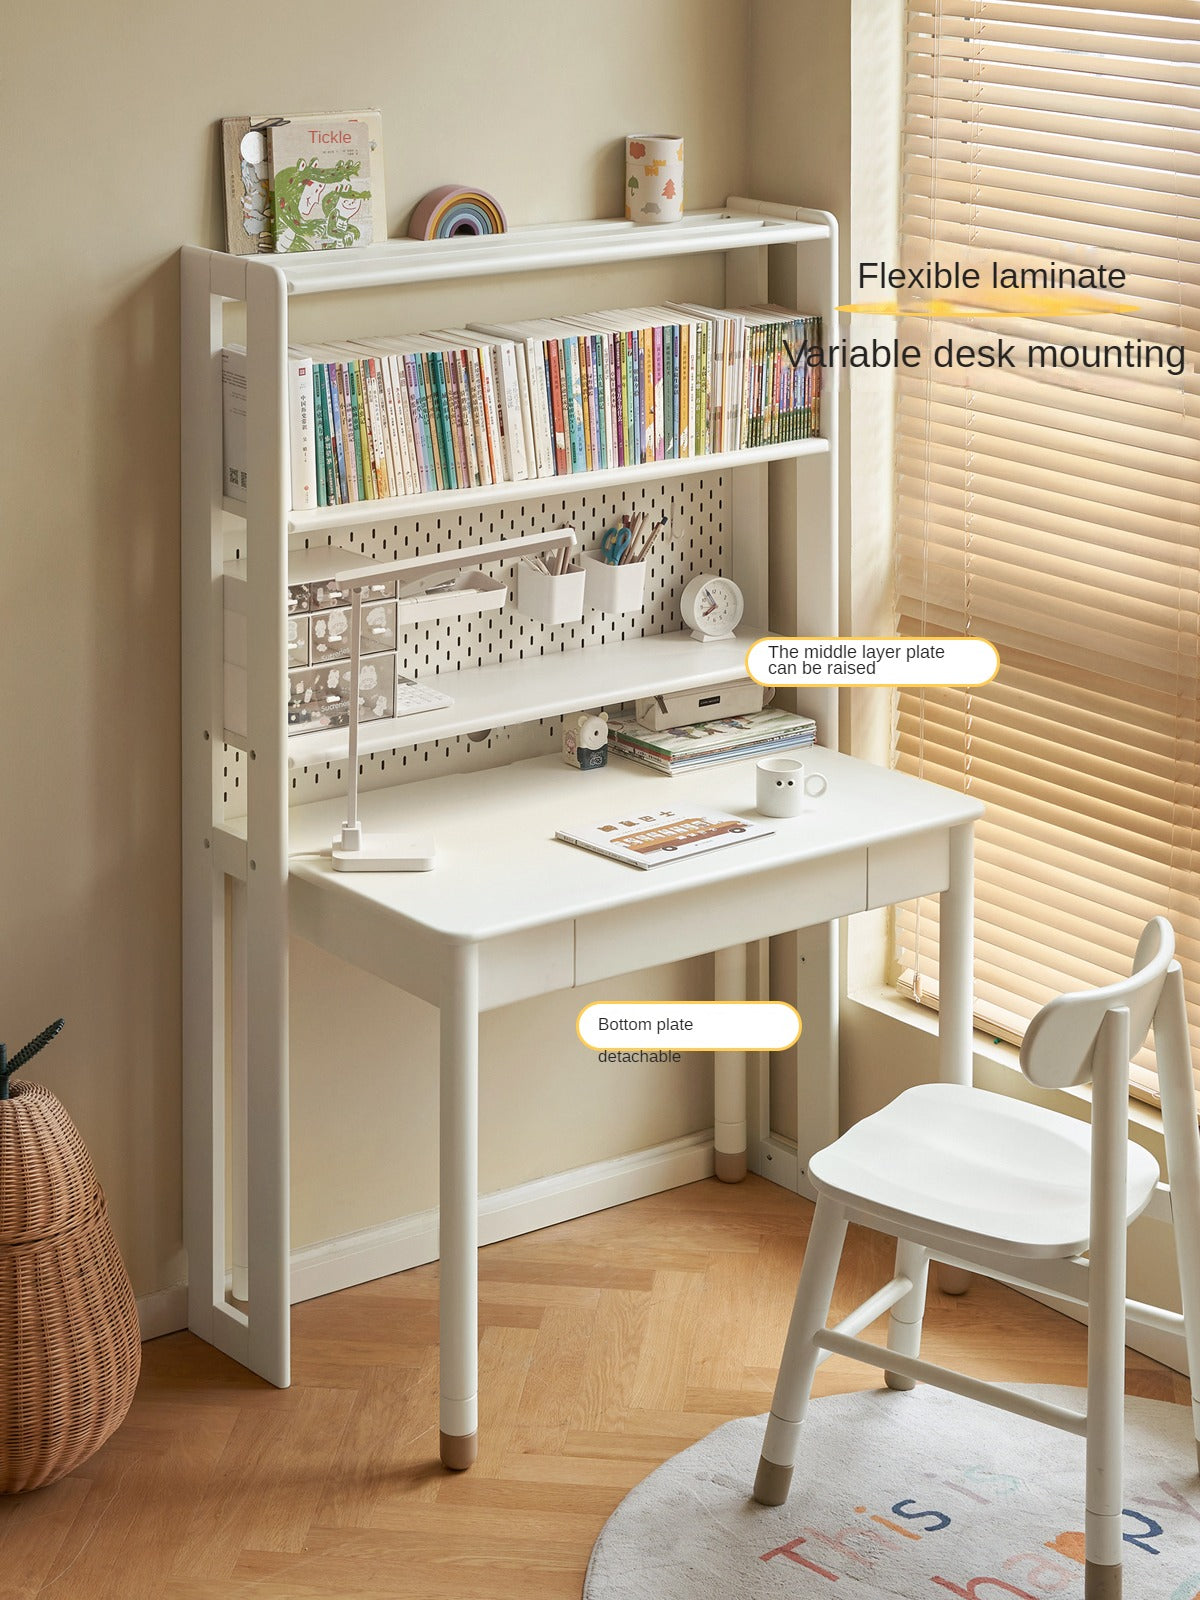 Birch solid wood cream style bookshelf floor-standing lifting children's study table"